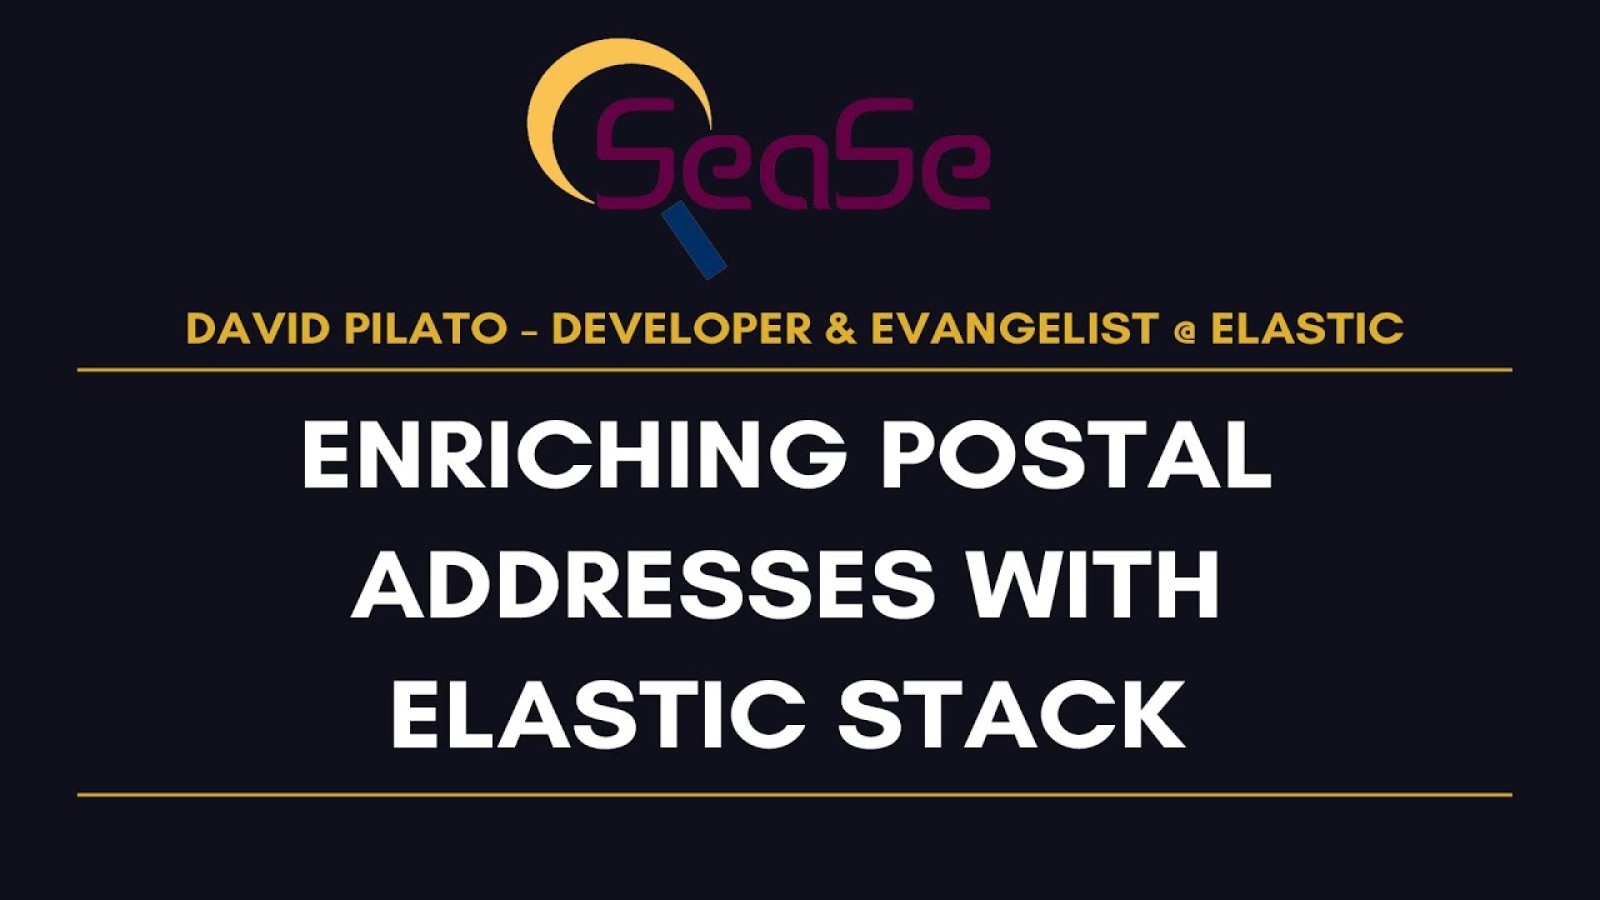 Enriching postal addresses with Elastic stack